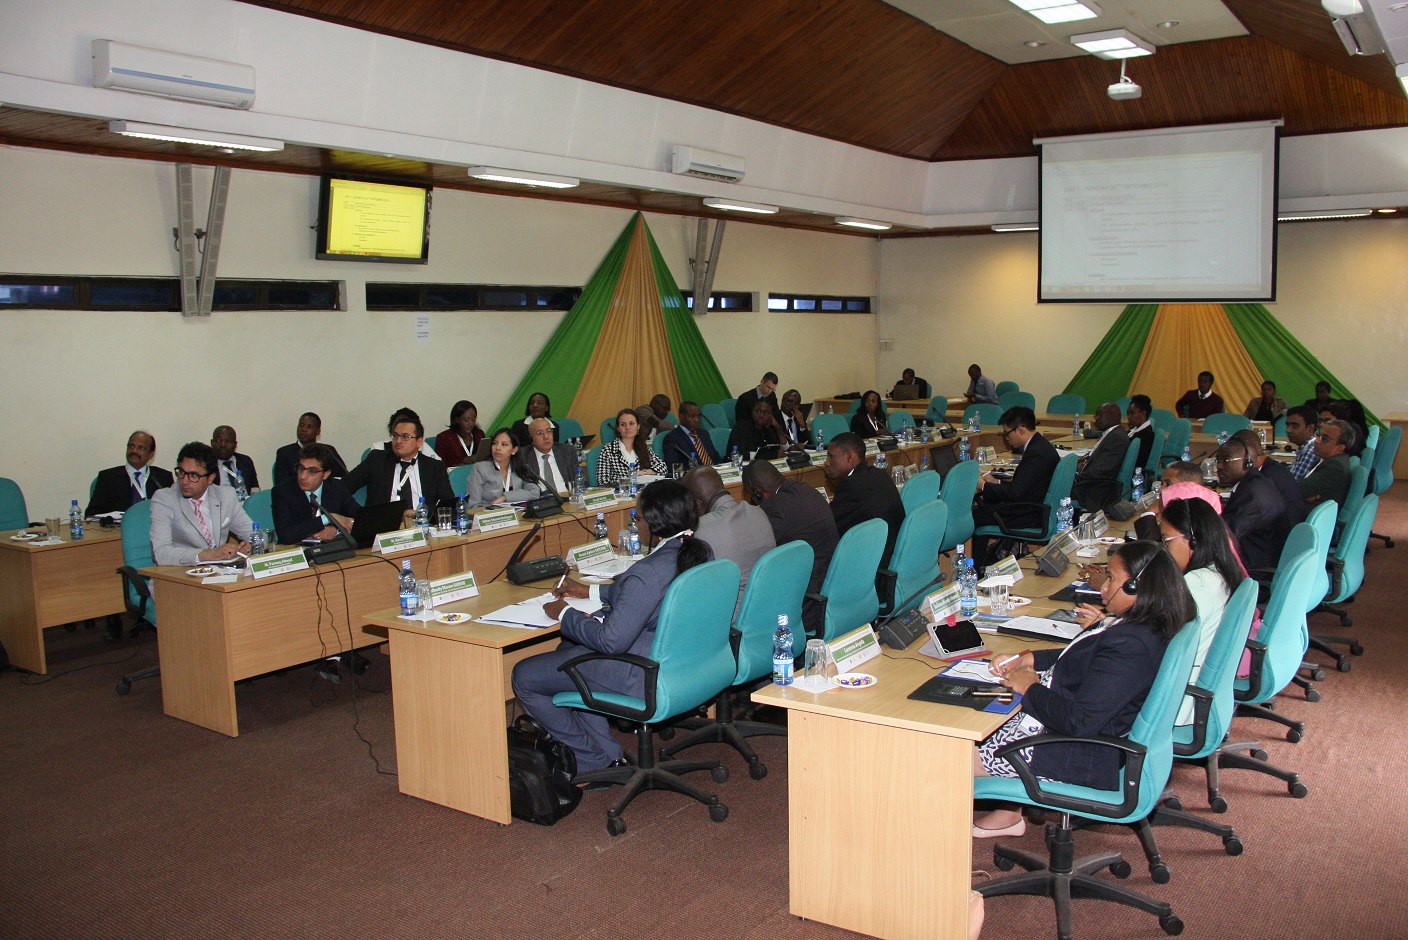 DFS member training session in Kenya.